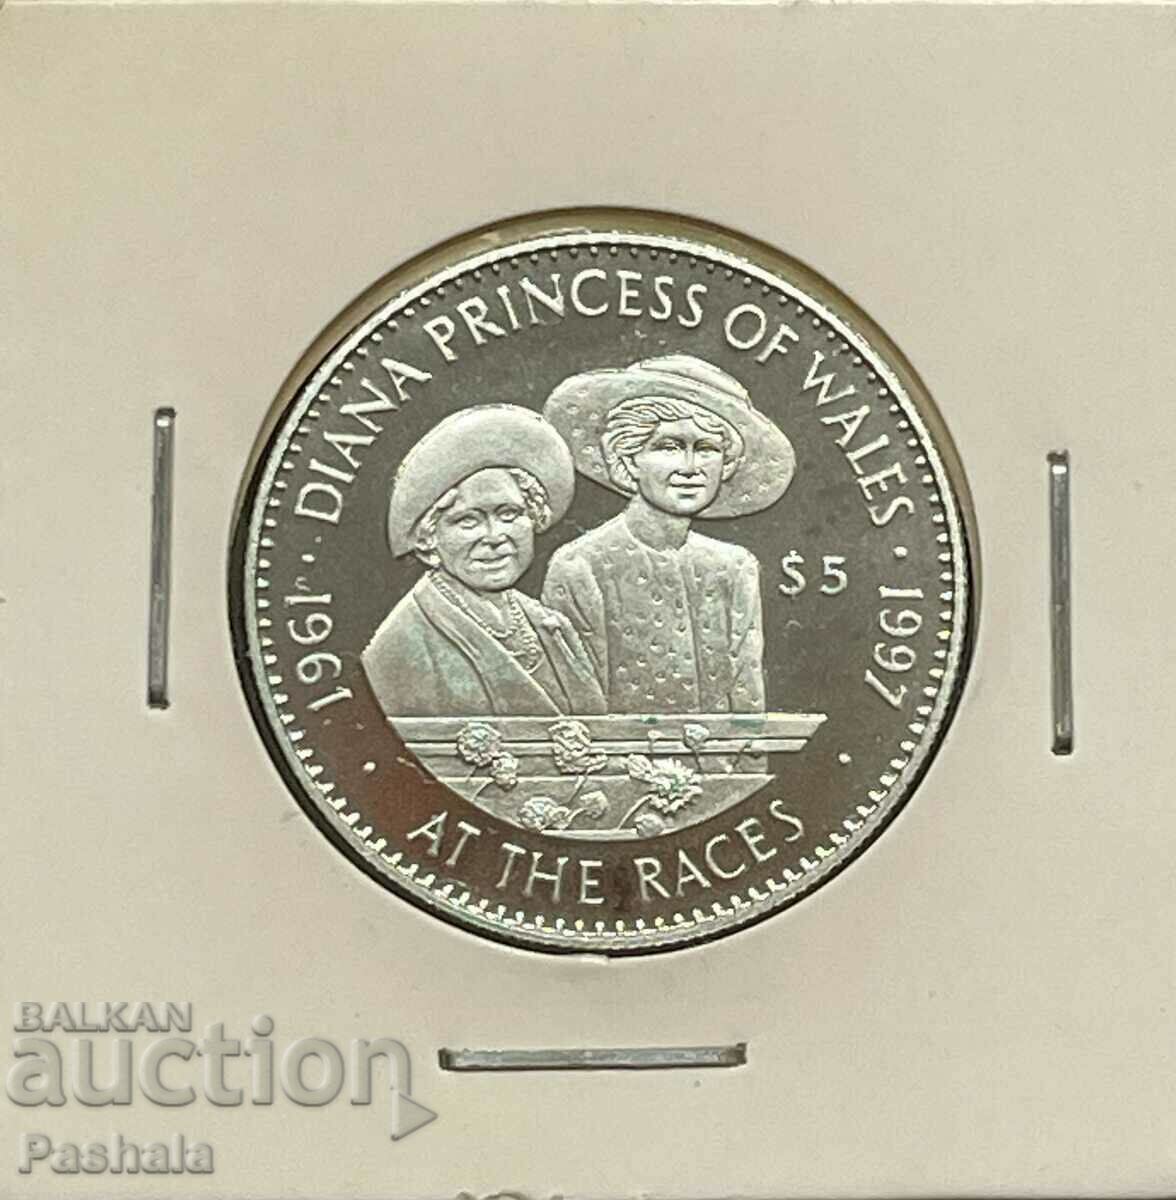 Solomon Islands $5 1998